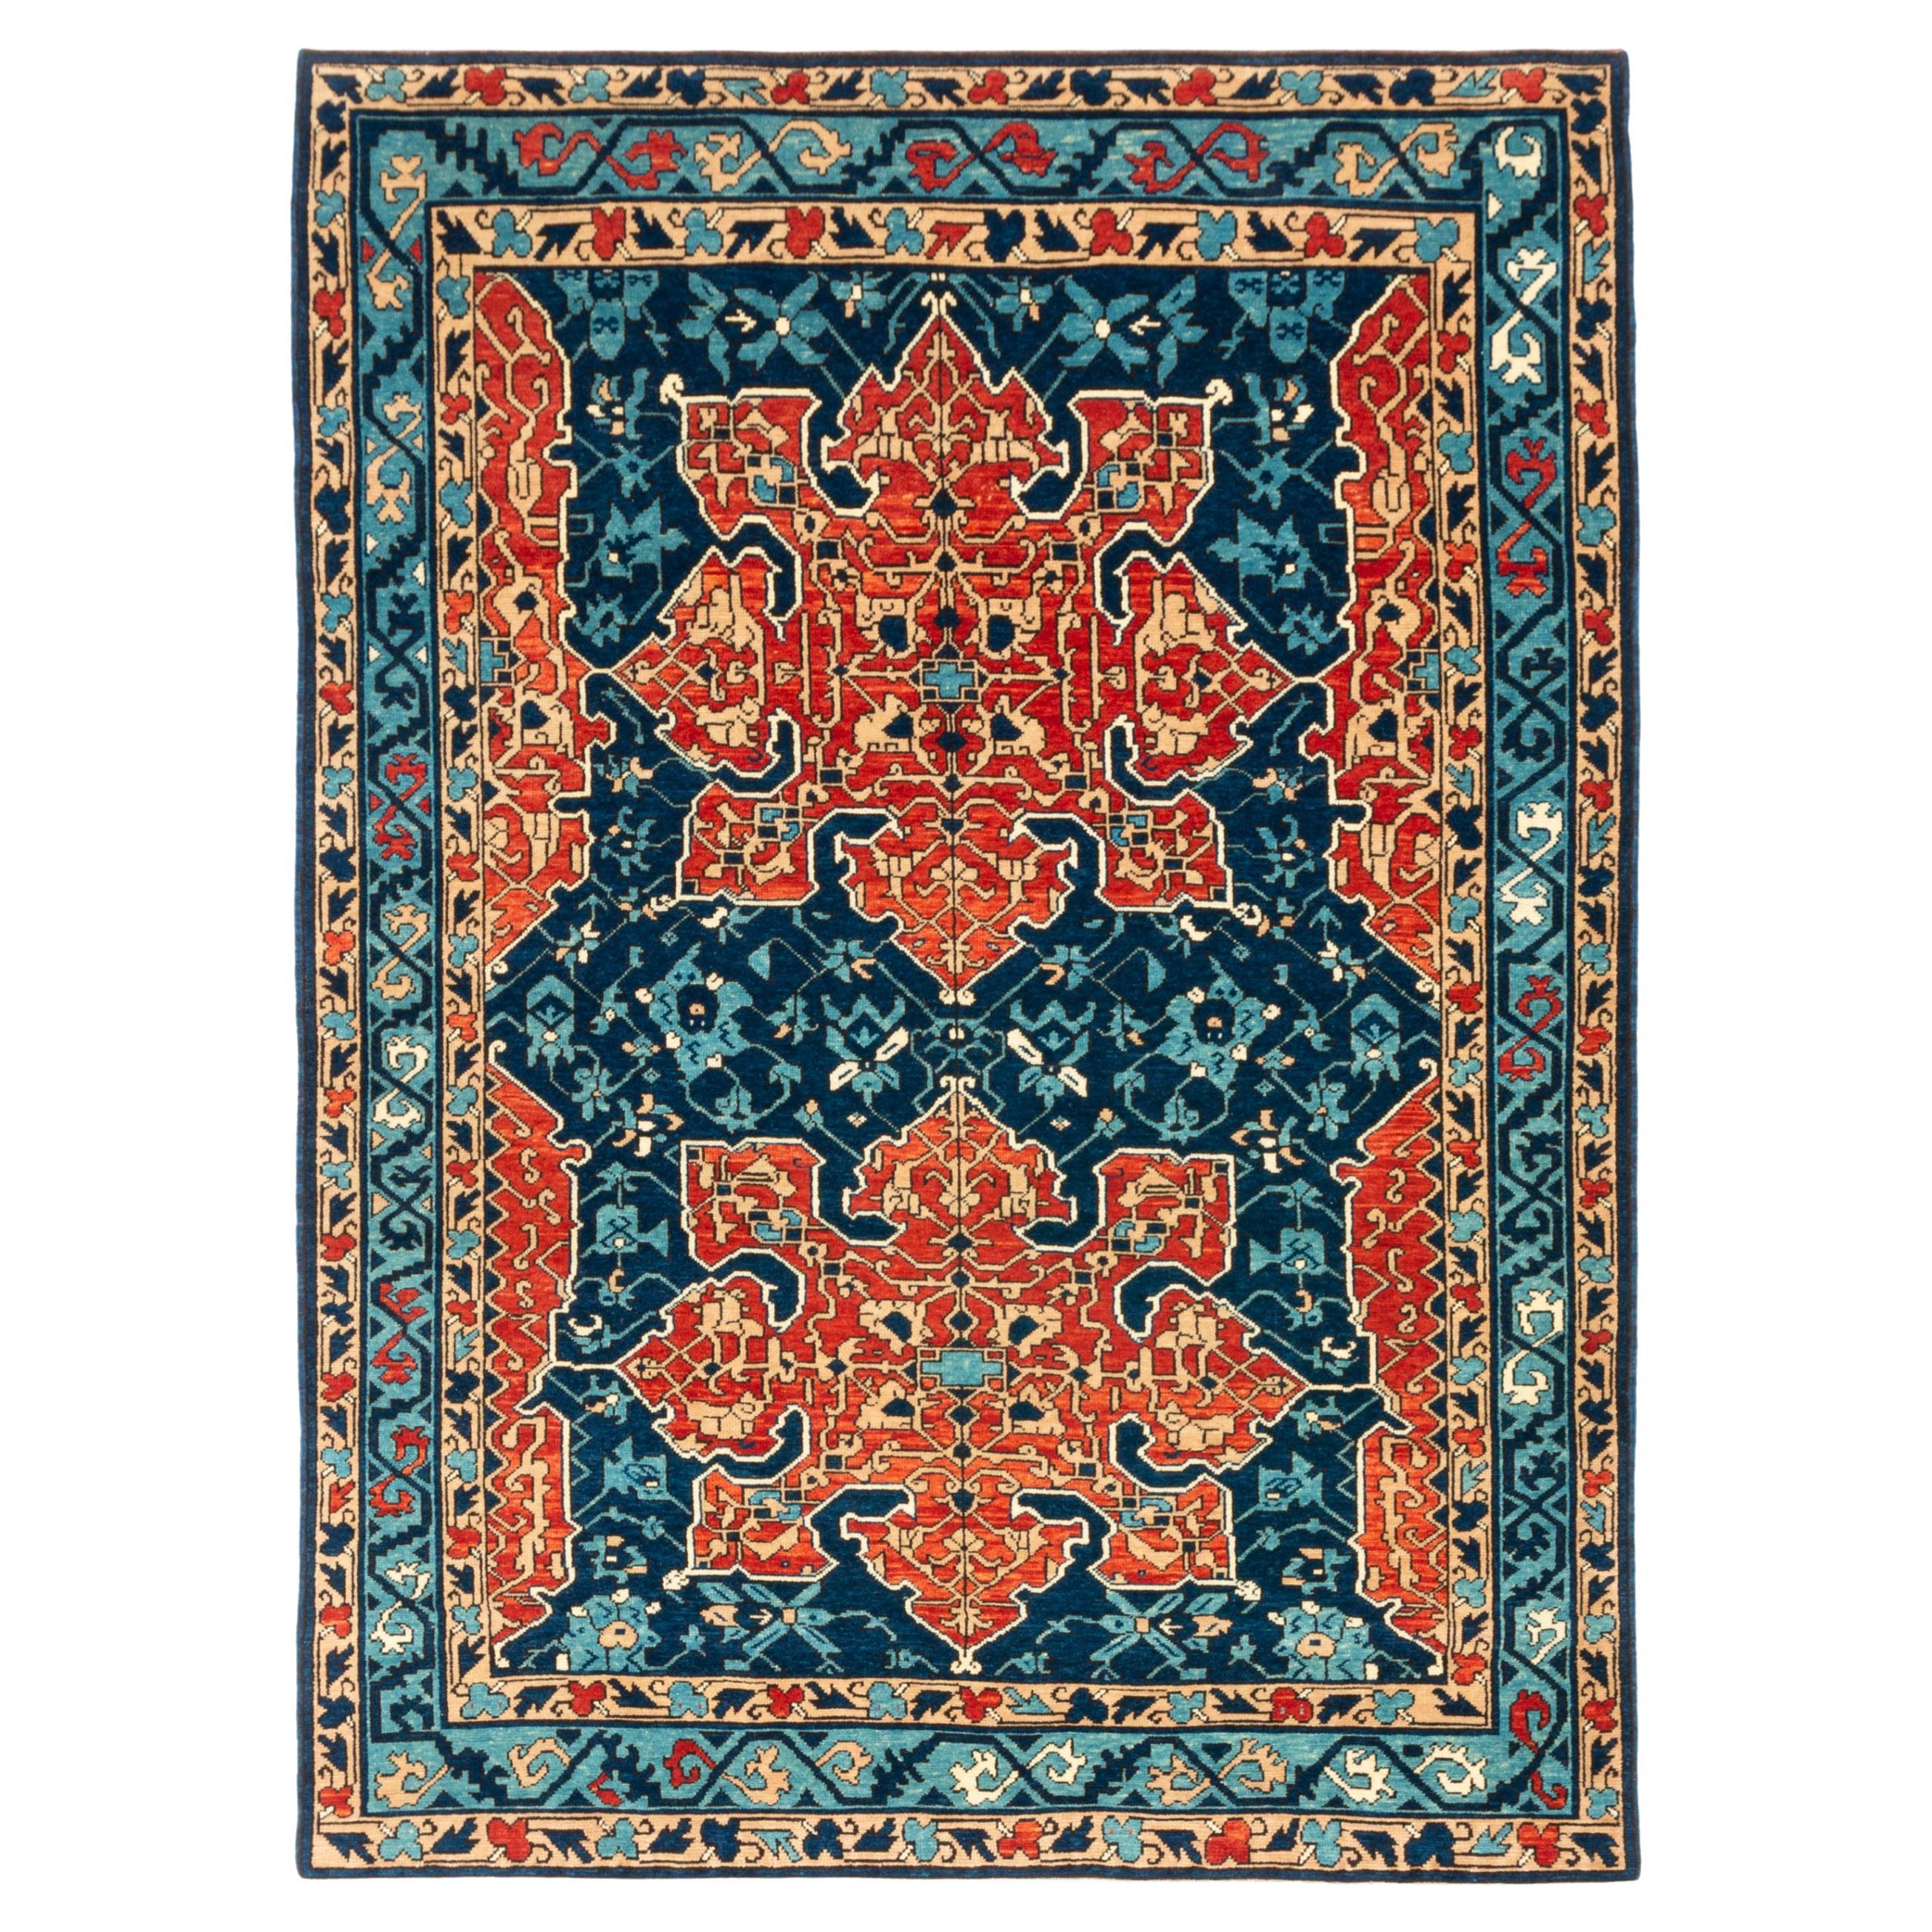 Ararat Rugs Star Ushak Carpet 16th Century Museum Piece Revival Rug Natural Dyed